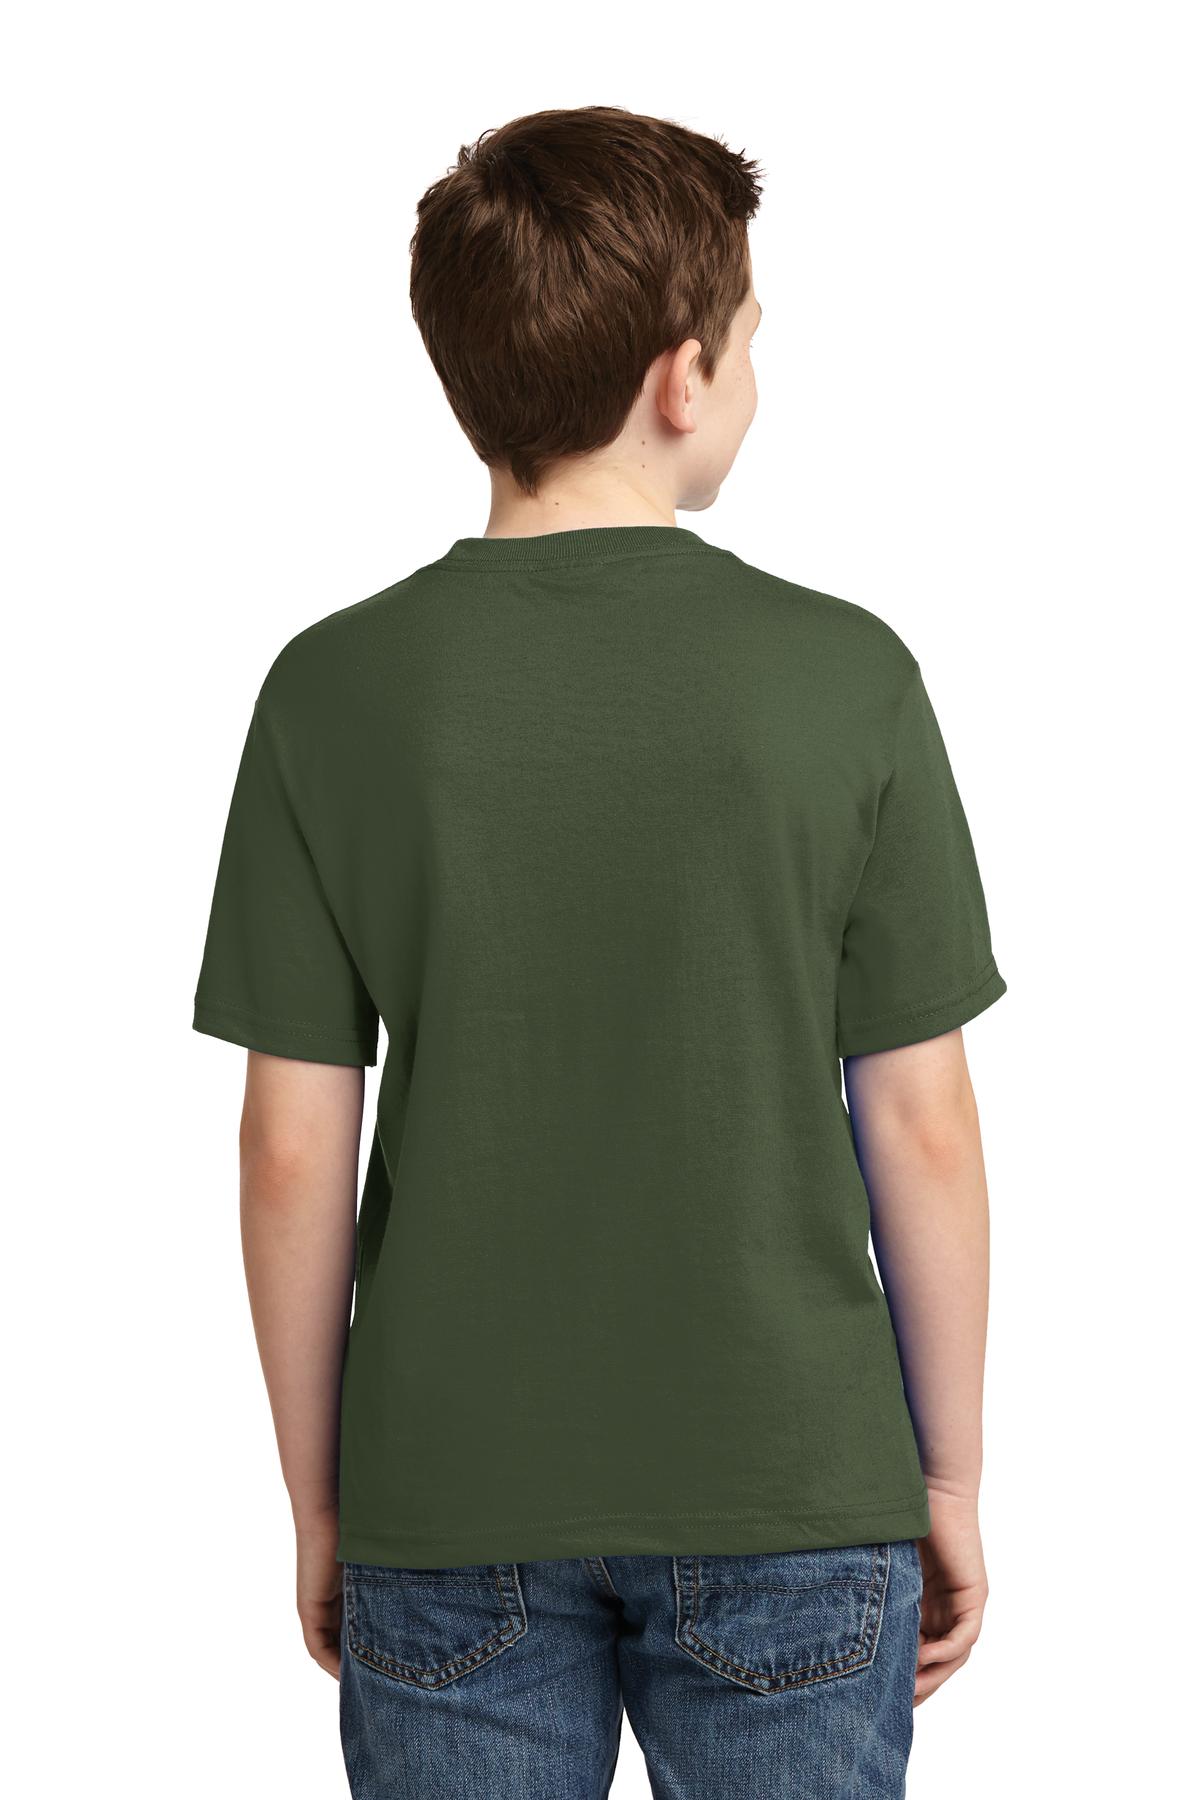 JERZEES® - Youth Dri-Power® 50/50 Cotton/Poly T-Shirt. 29B [Military Green] - DFW Impression